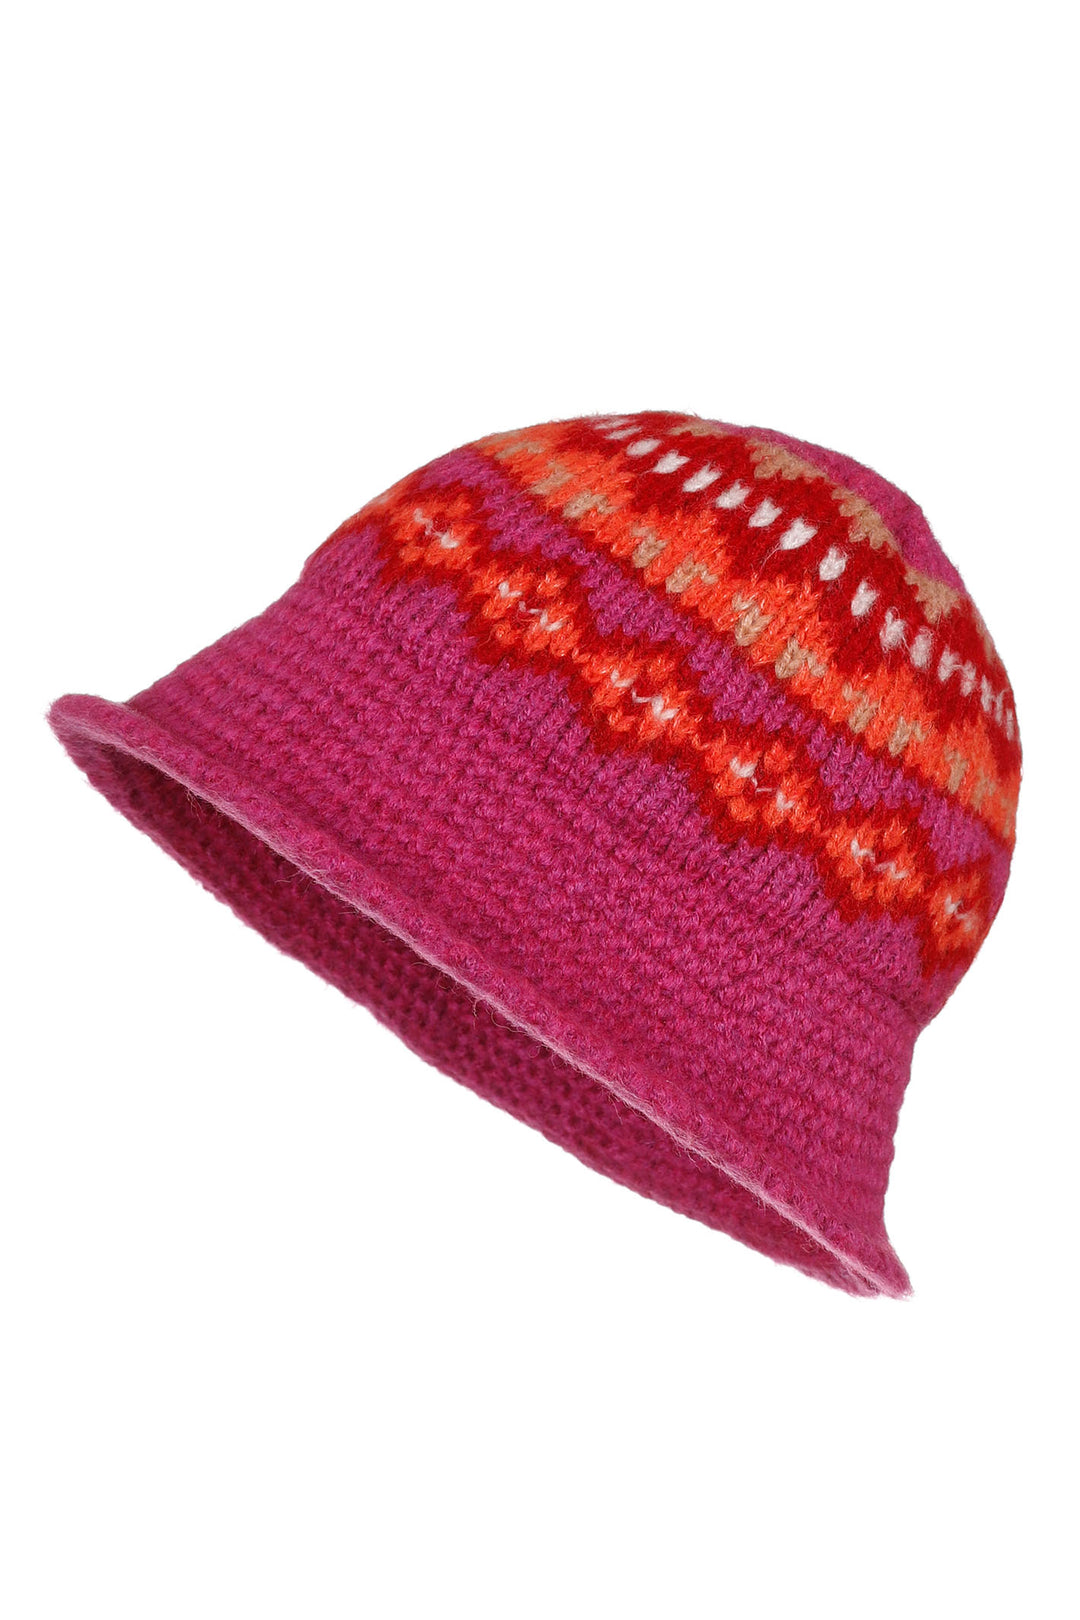 Fonem FO 2707 Fuschia Pink Knitted Hat - Shirley Allum Boutique